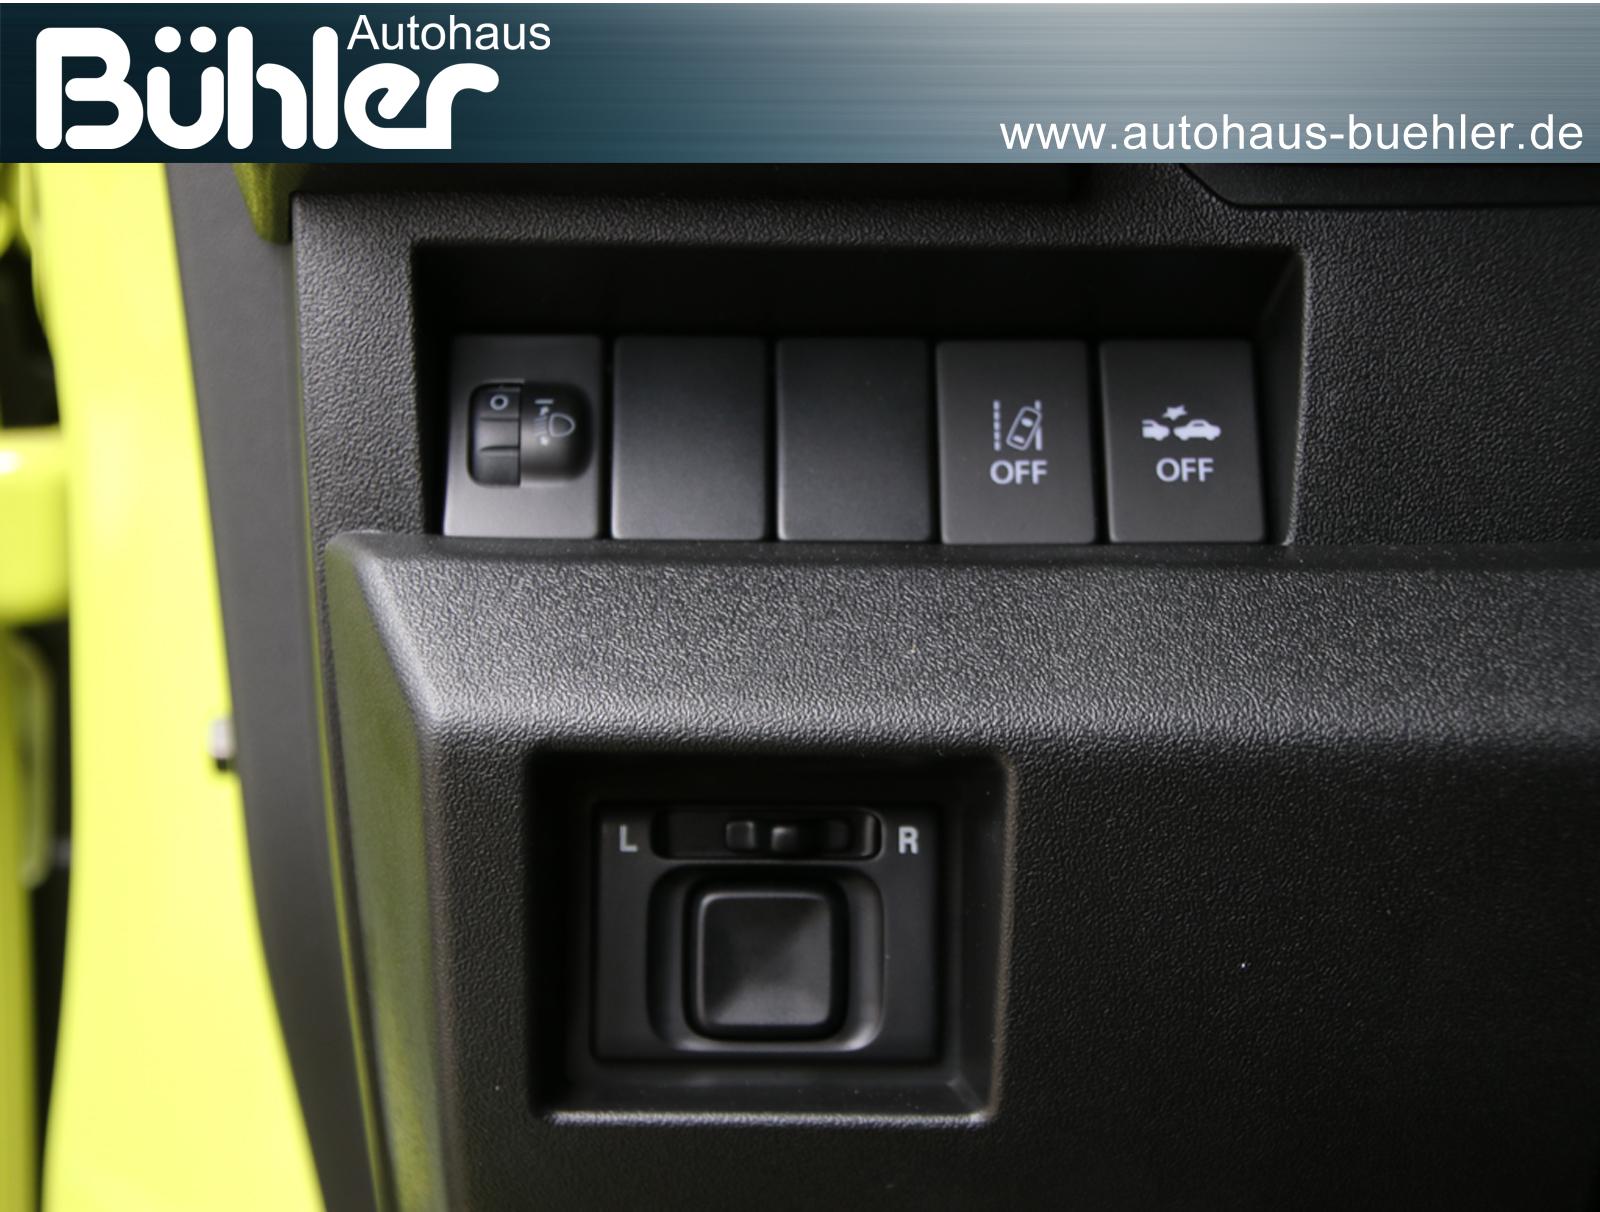 Suzuki Jimny 1.5 Allgrip Comfort - Kinetic Yellow, Dach Bluish Black Pearl Metallic